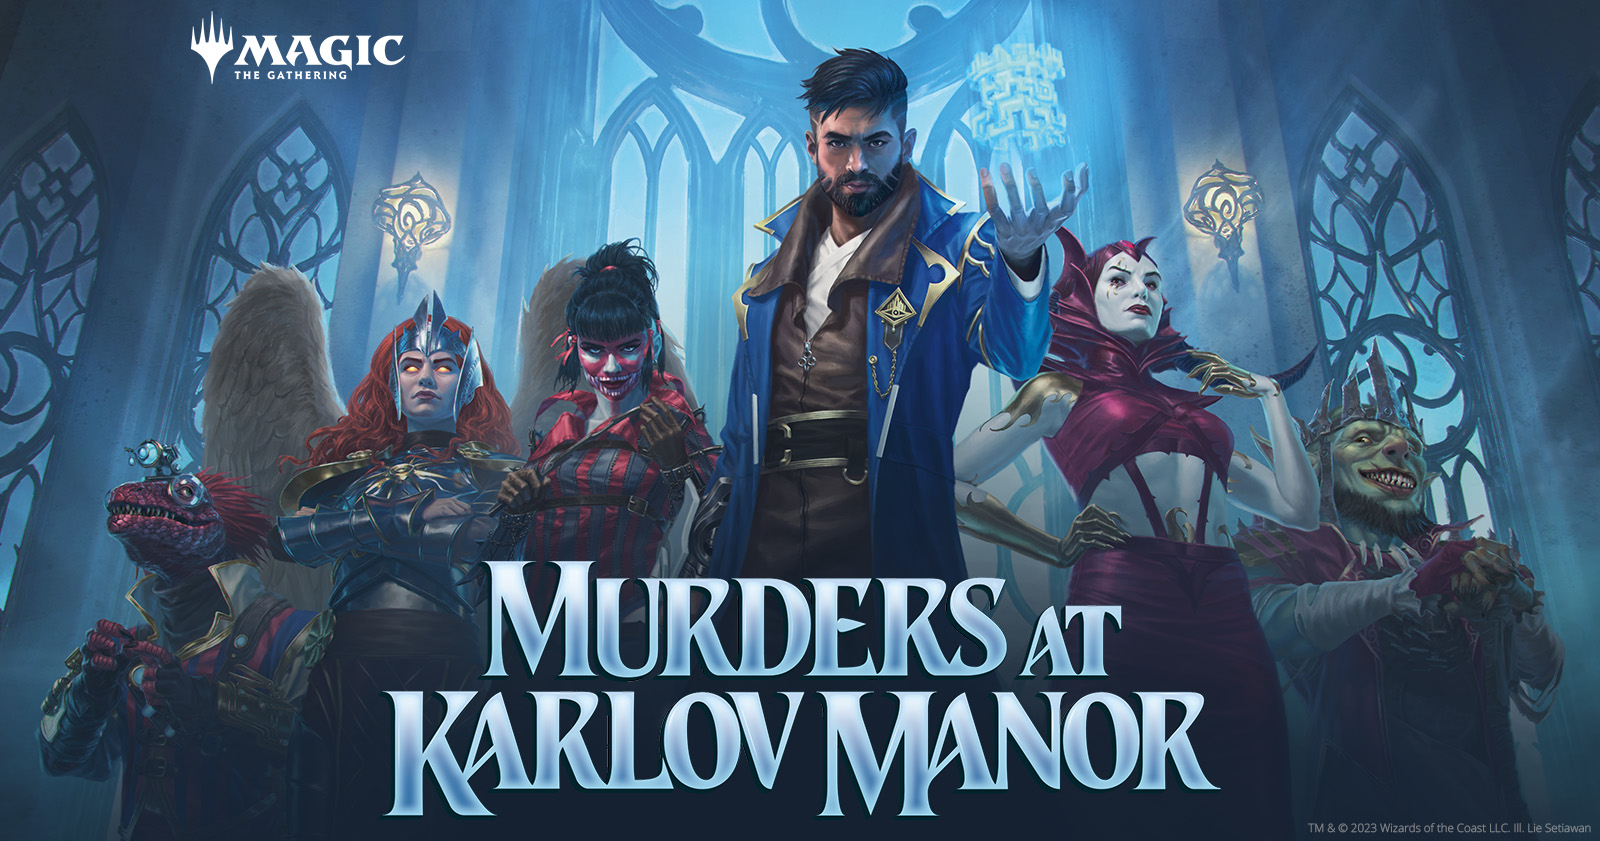 PreRelease Friday 6pm Murders at Karlov Manor